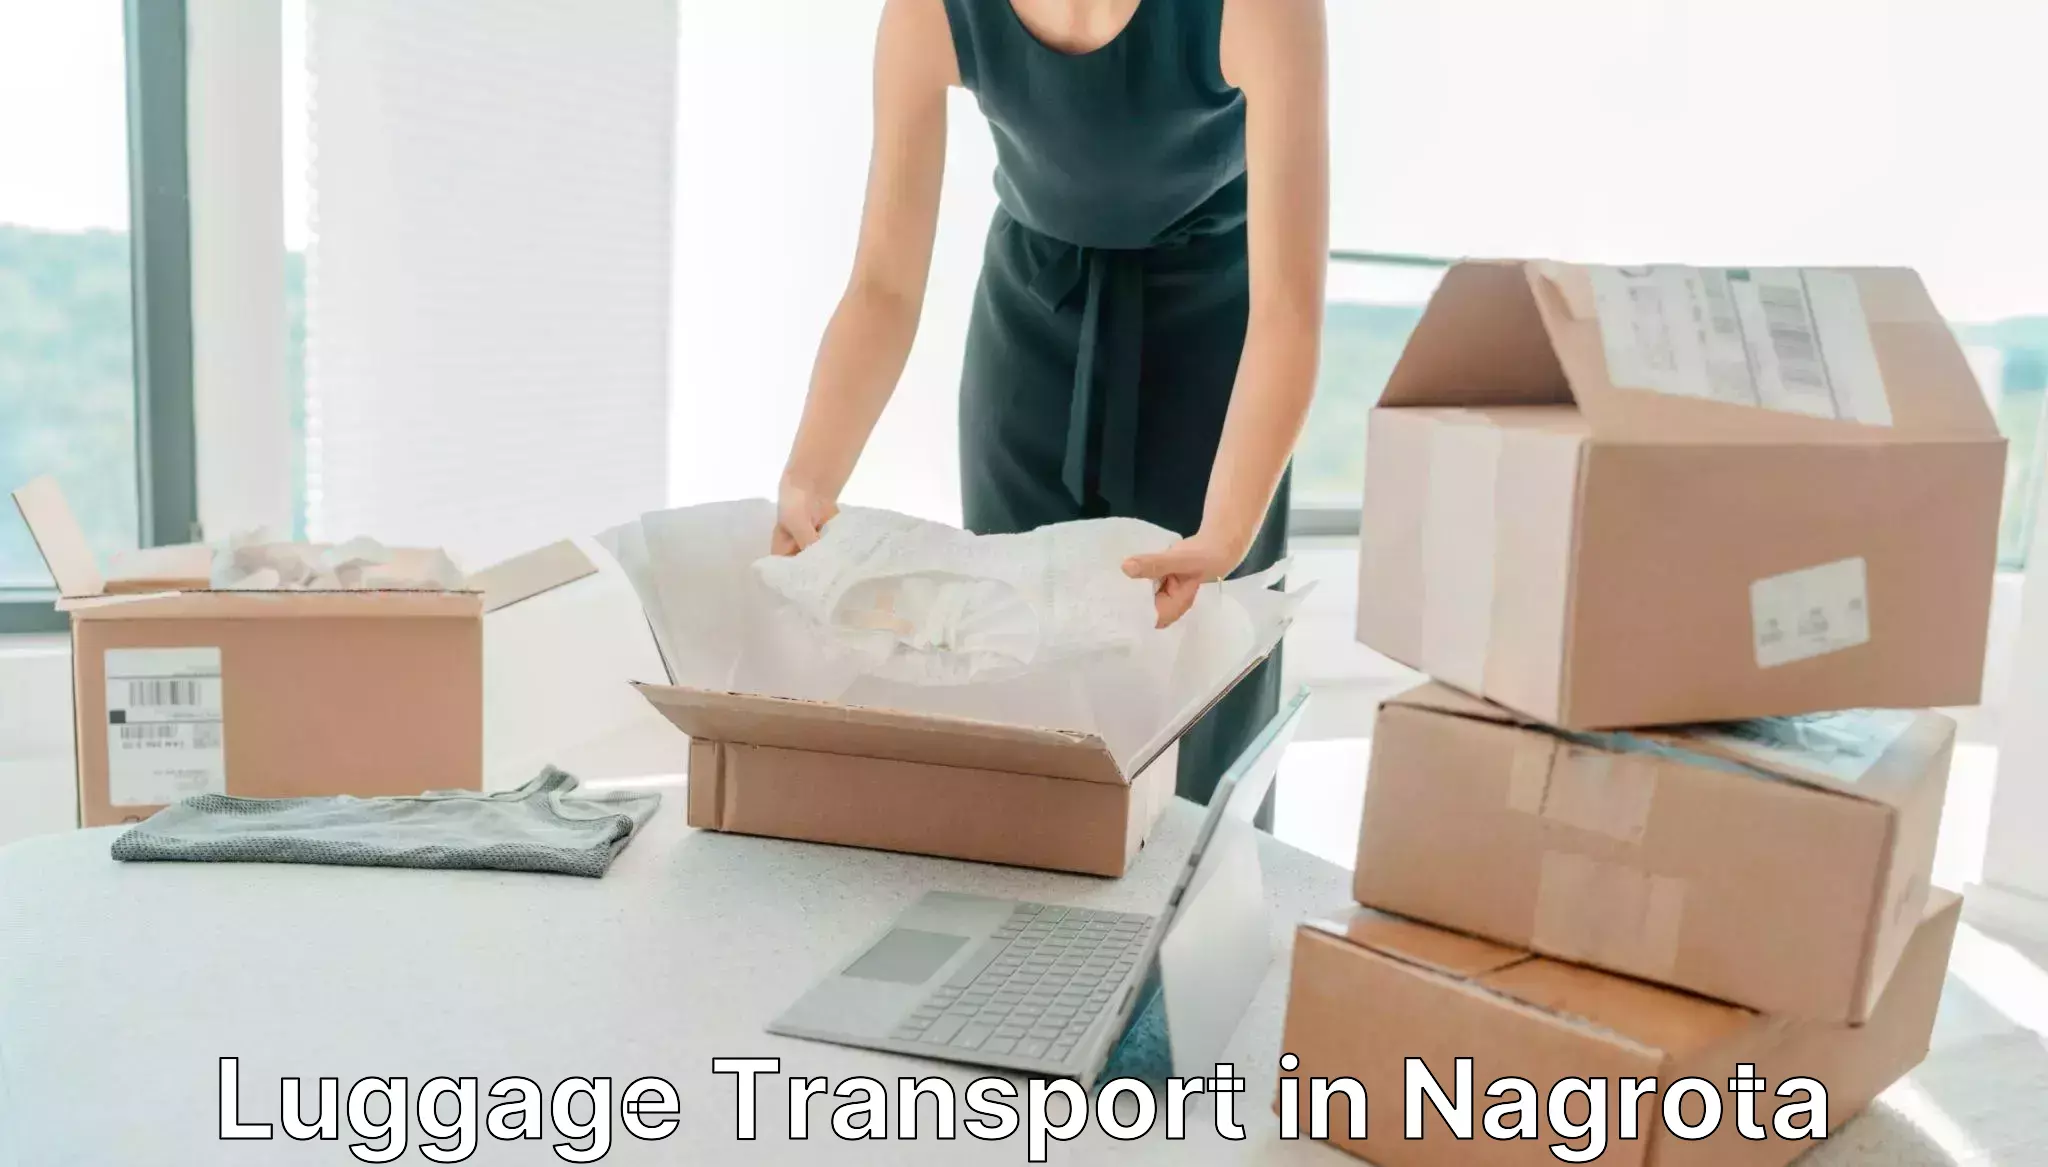 Rural baggage transport in Nagrota